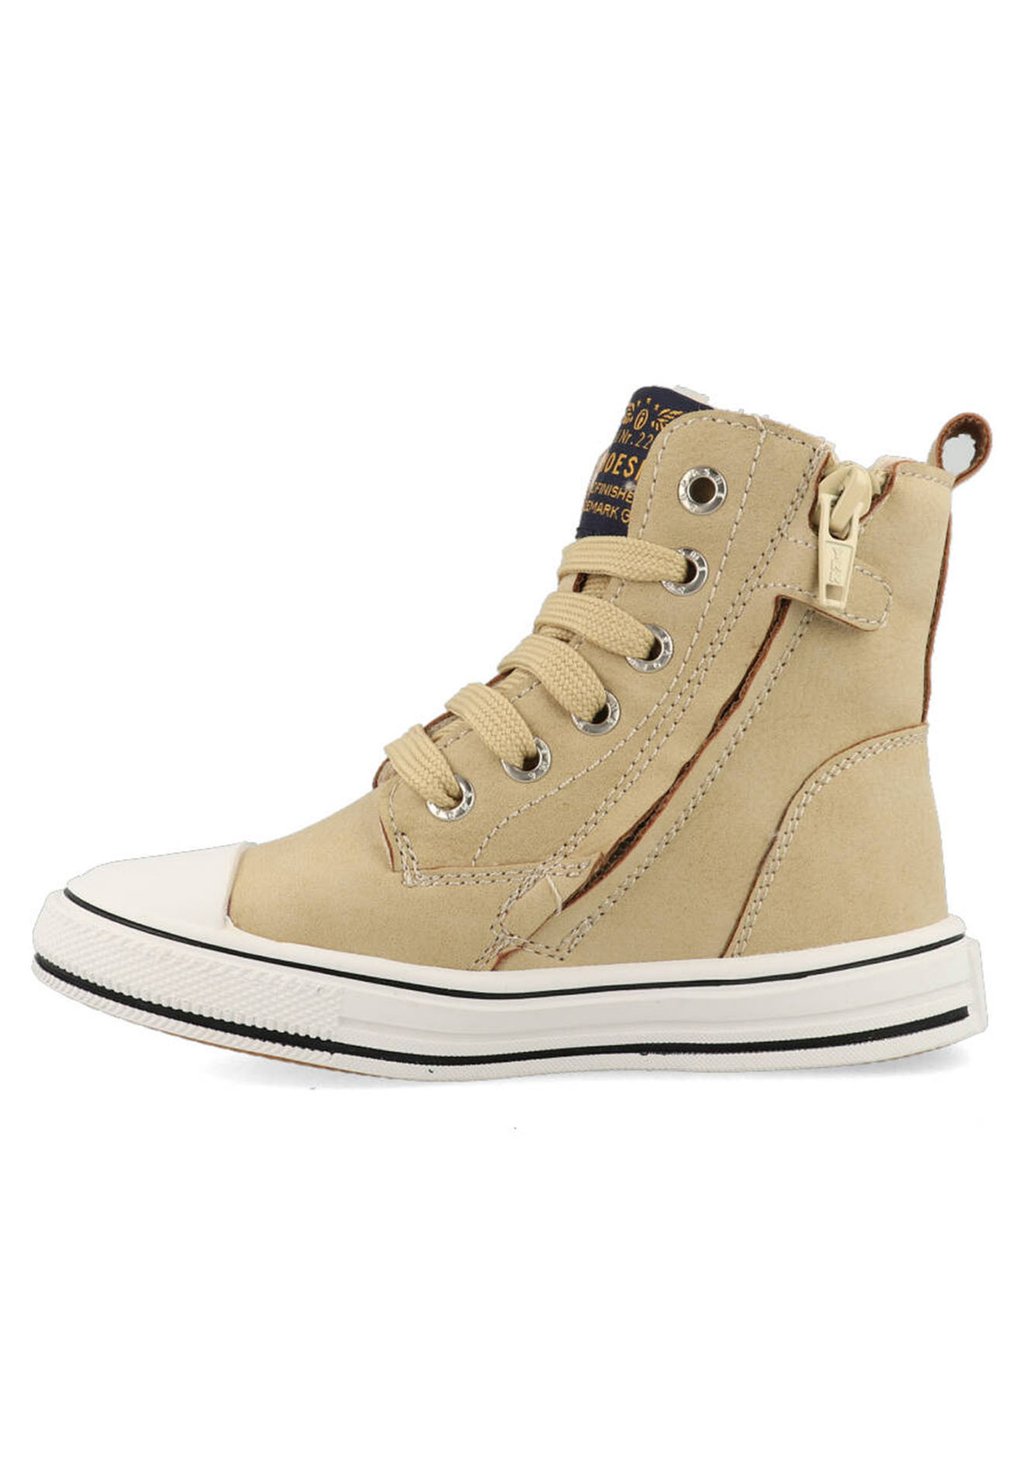 Обувь для ходьбы First ON22W211-F Shoesme, цвет beige первая обувь для ходьбы shoesme цвет brons